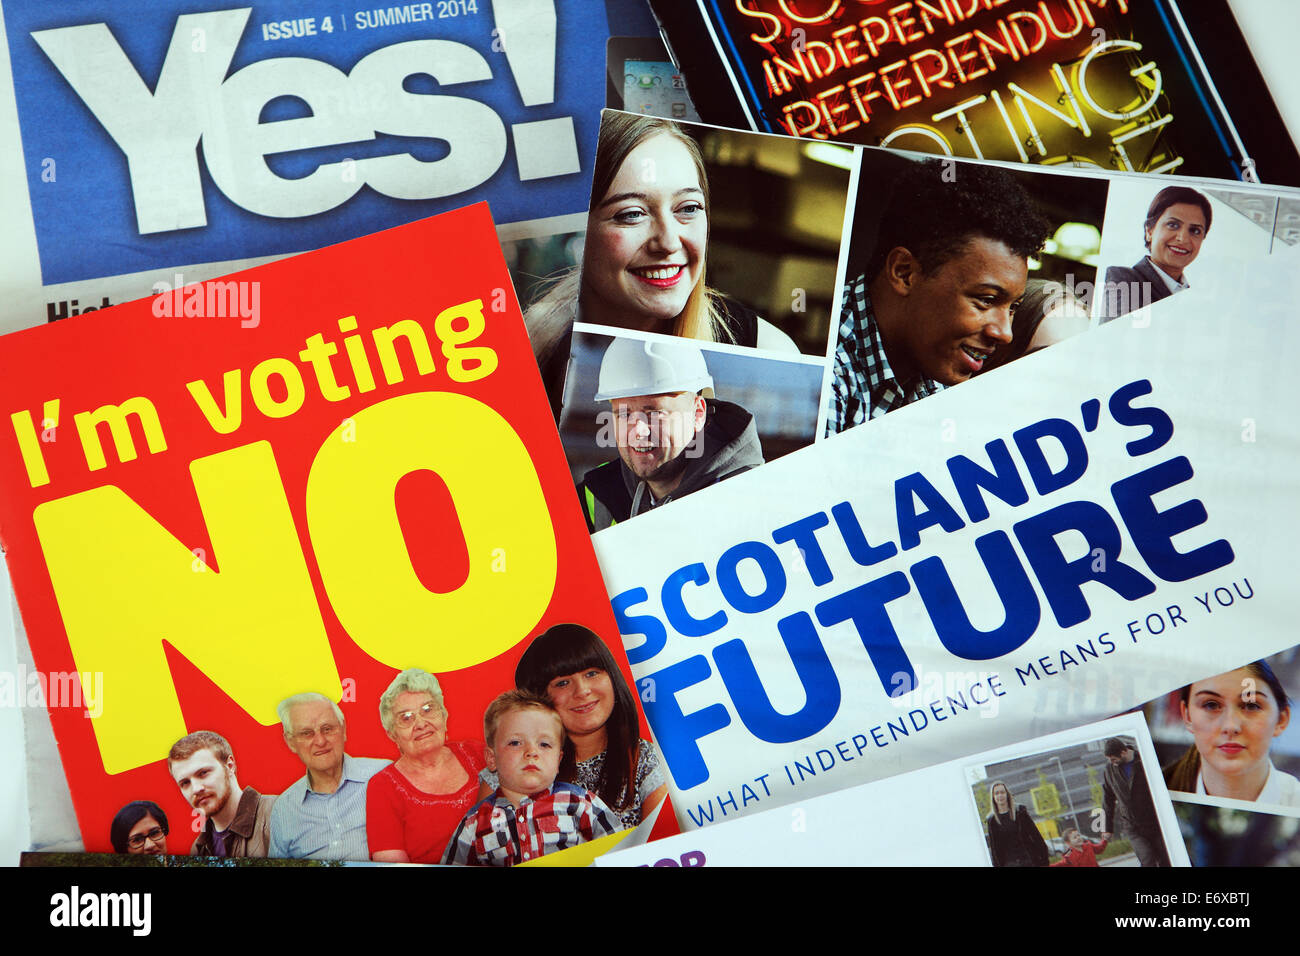 Scottish Referendum September 2014 Stock Photo